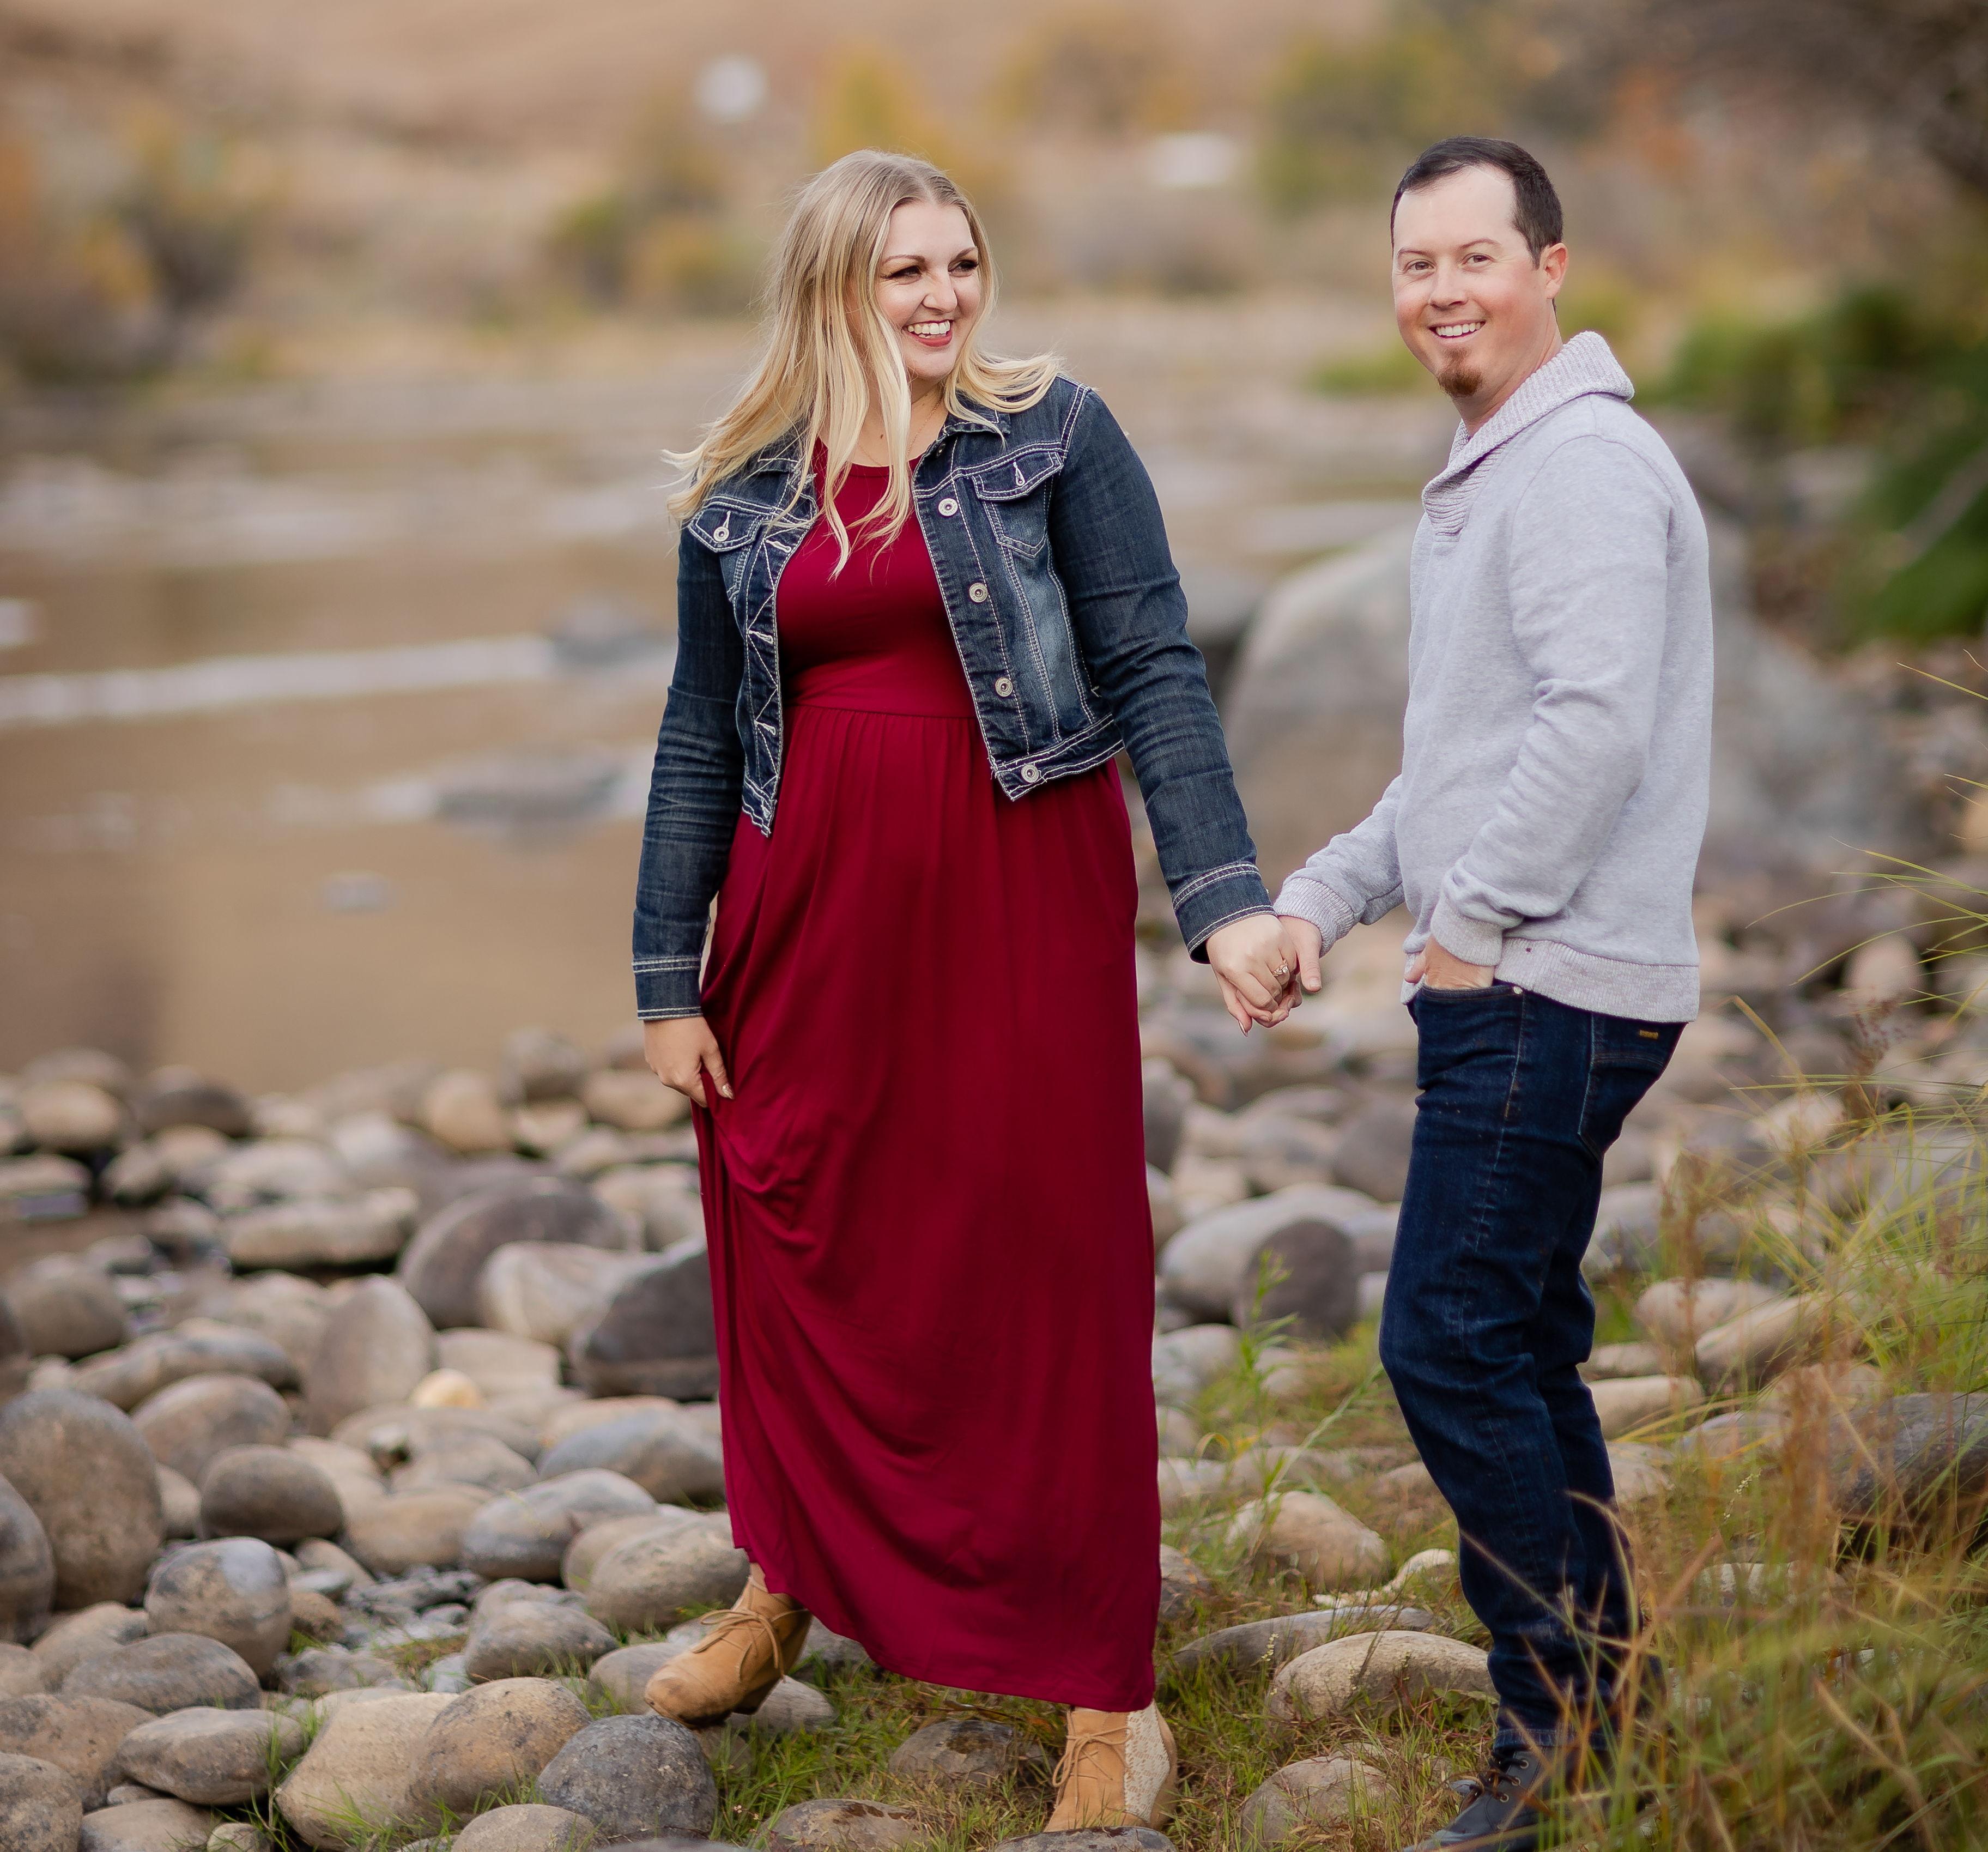 The Wedding Website of Kelsey Blackburn and Juston Smart